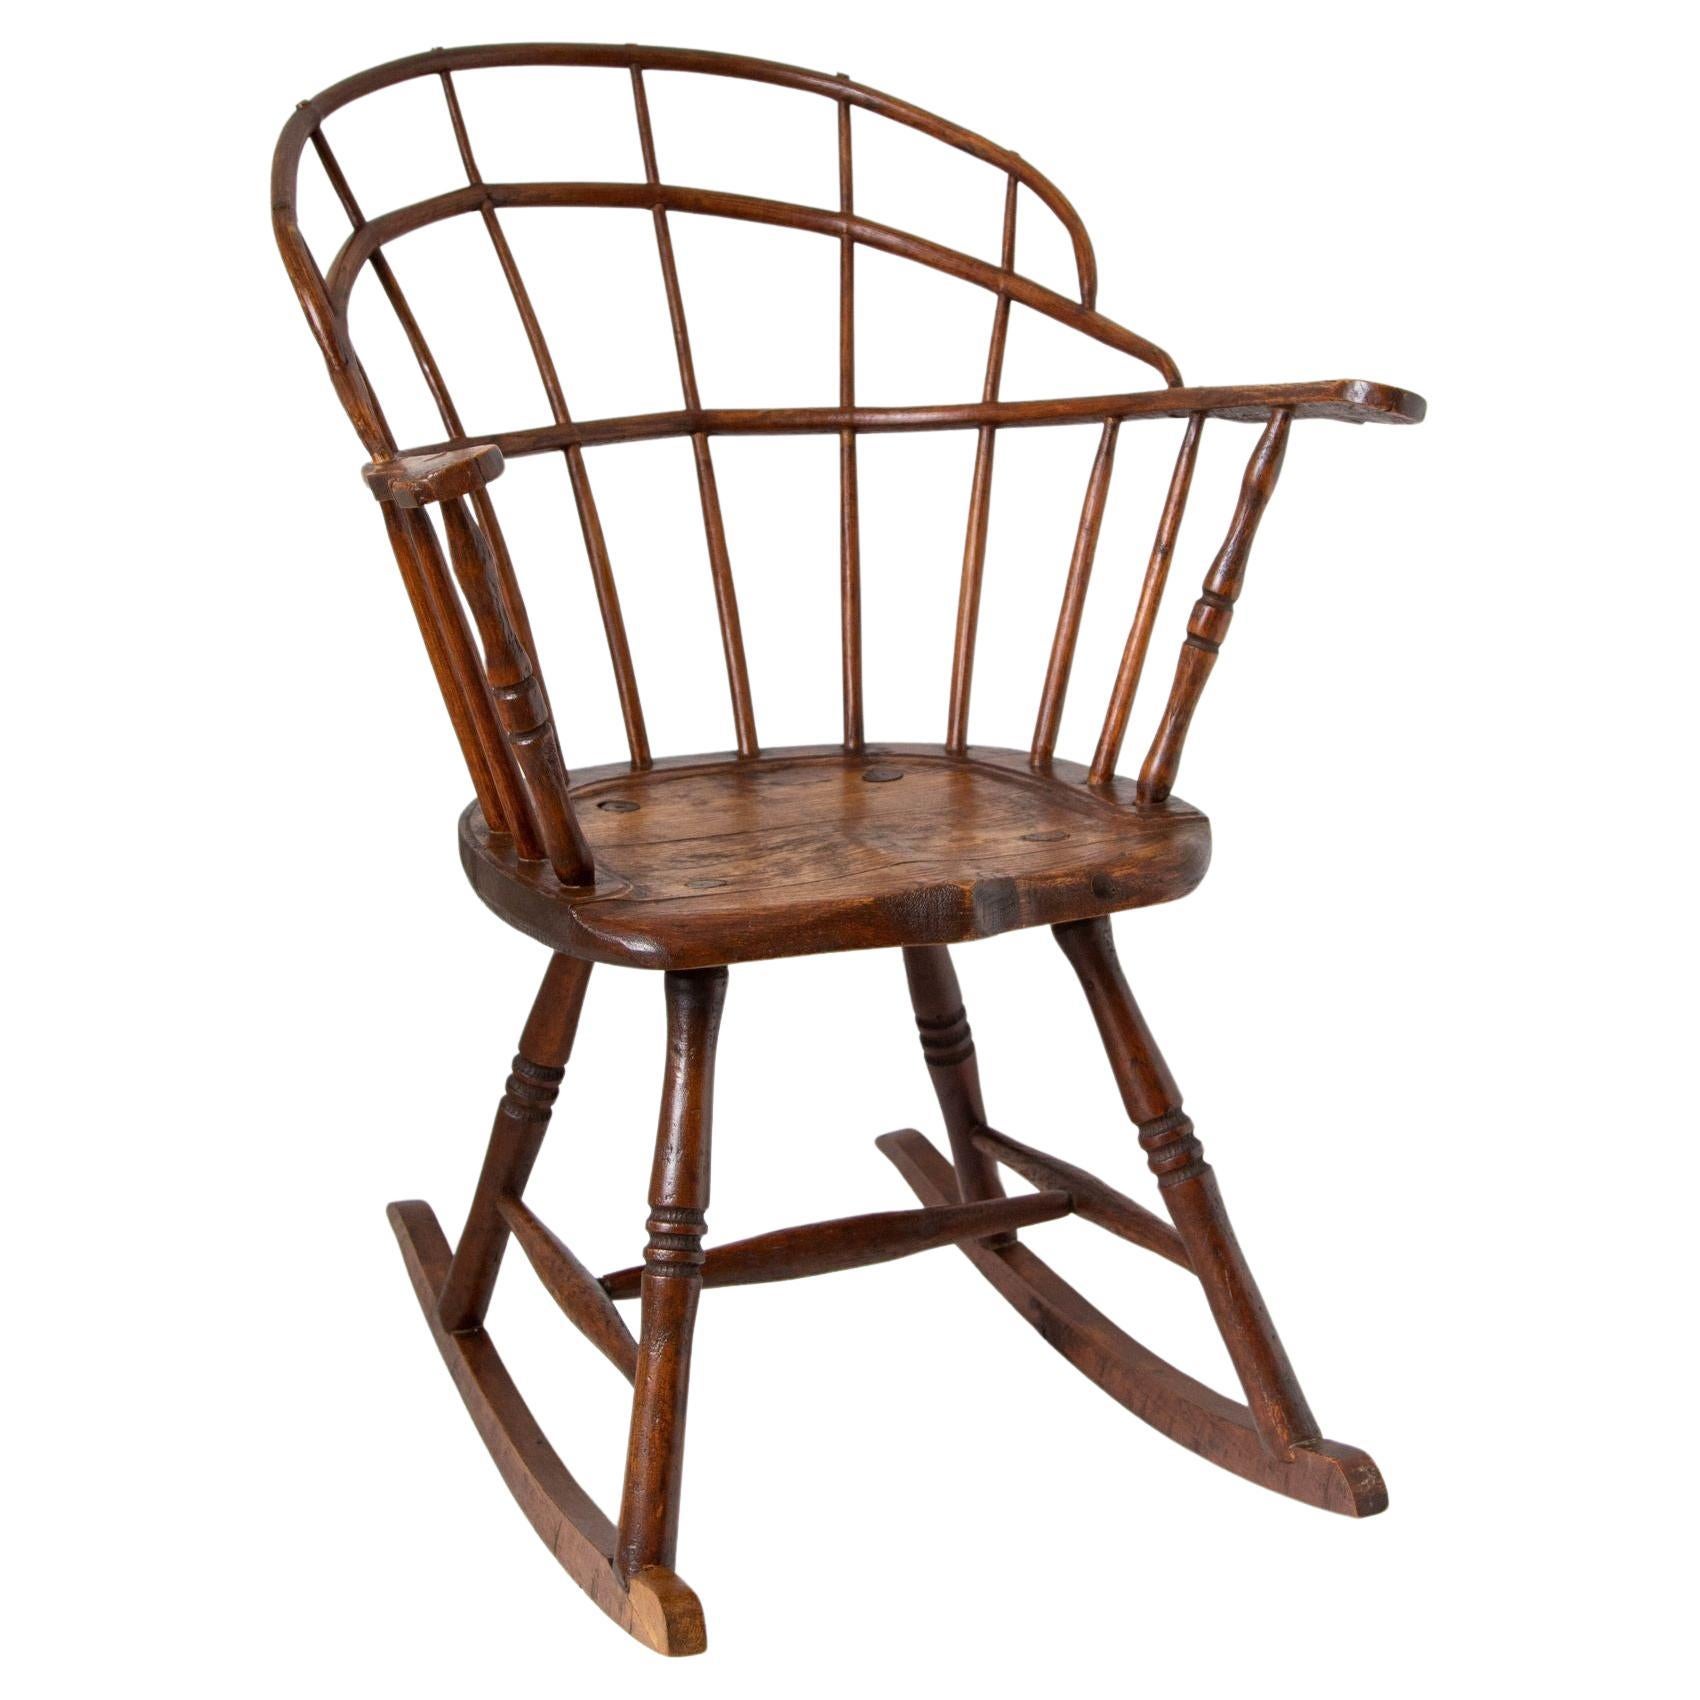 How do I identify a Windsor rocking chair?